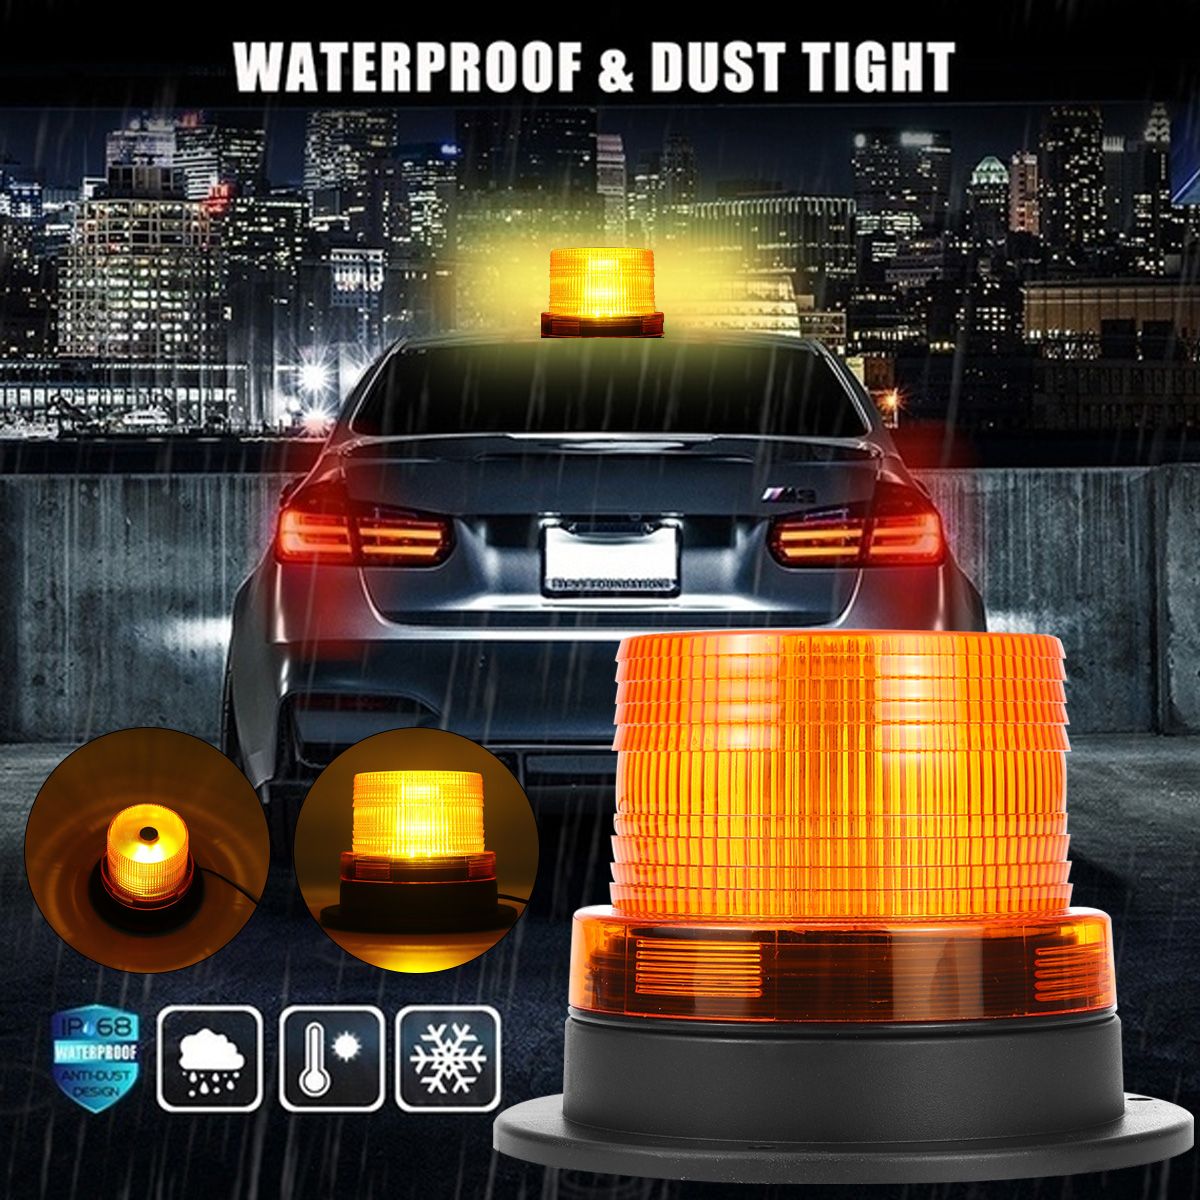 Car-Bus-Roof-Emergency-Flash-Strobe-Round-LED-Beacon-Warning-Light-Magnetic-1763140